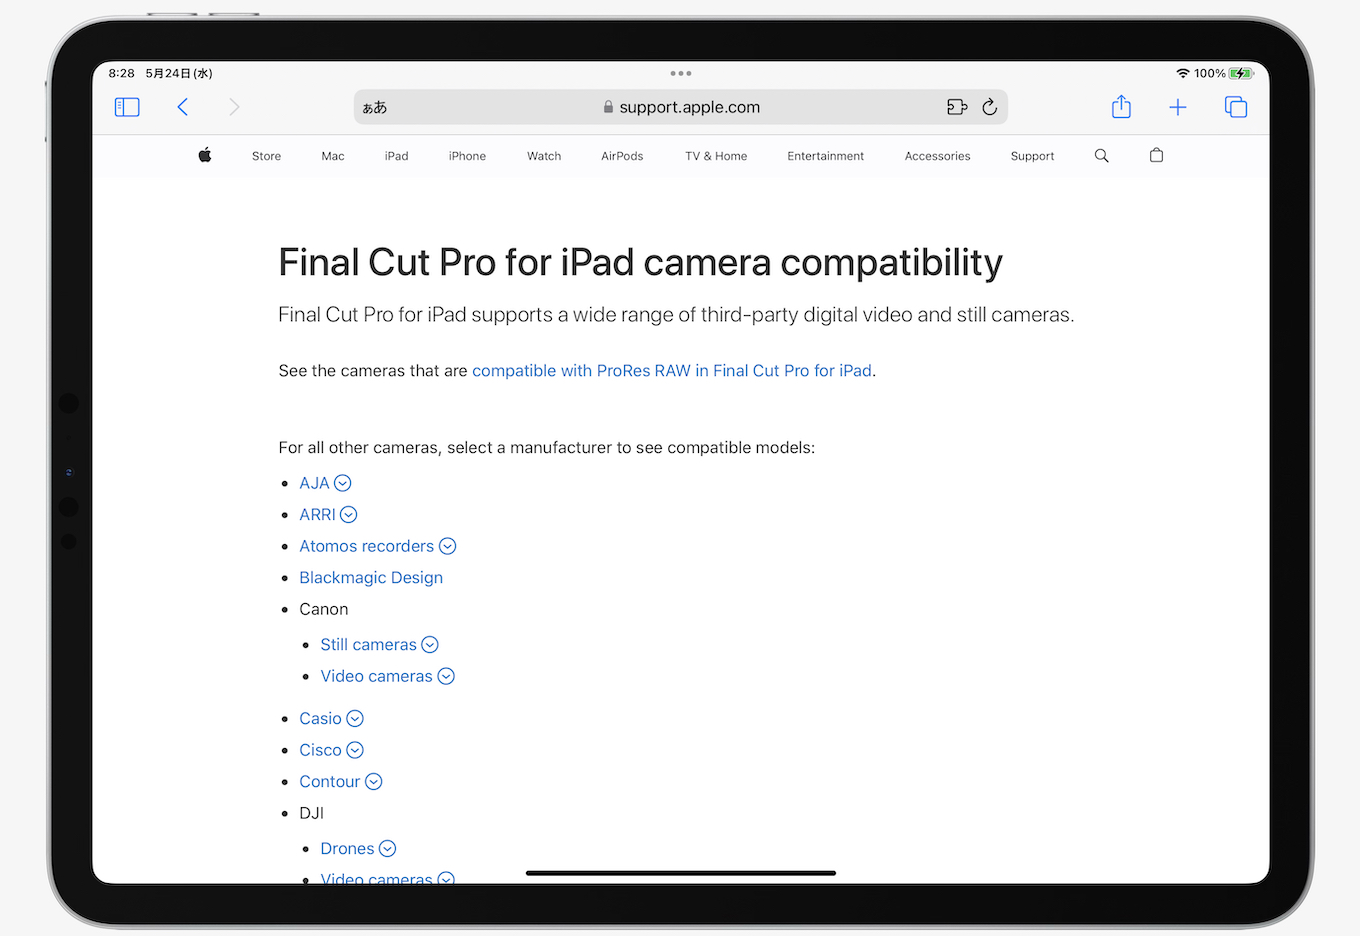 Final Cut Pro for iPad camera compatibility